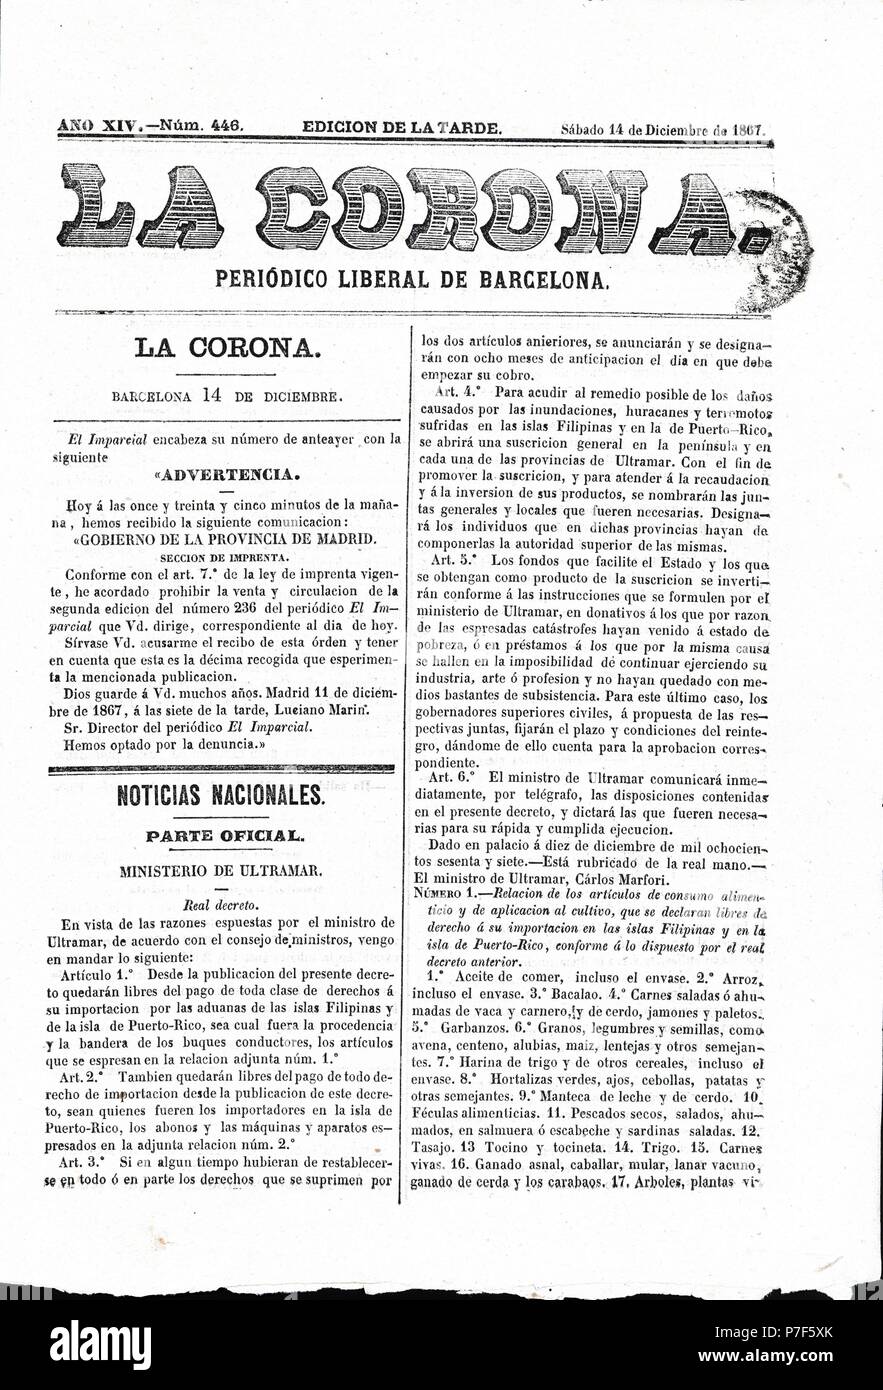 Portada del periódico liberal 'La Corona', edición de tarde. Barcelona, 14 diciembre 1867. Stock Photo